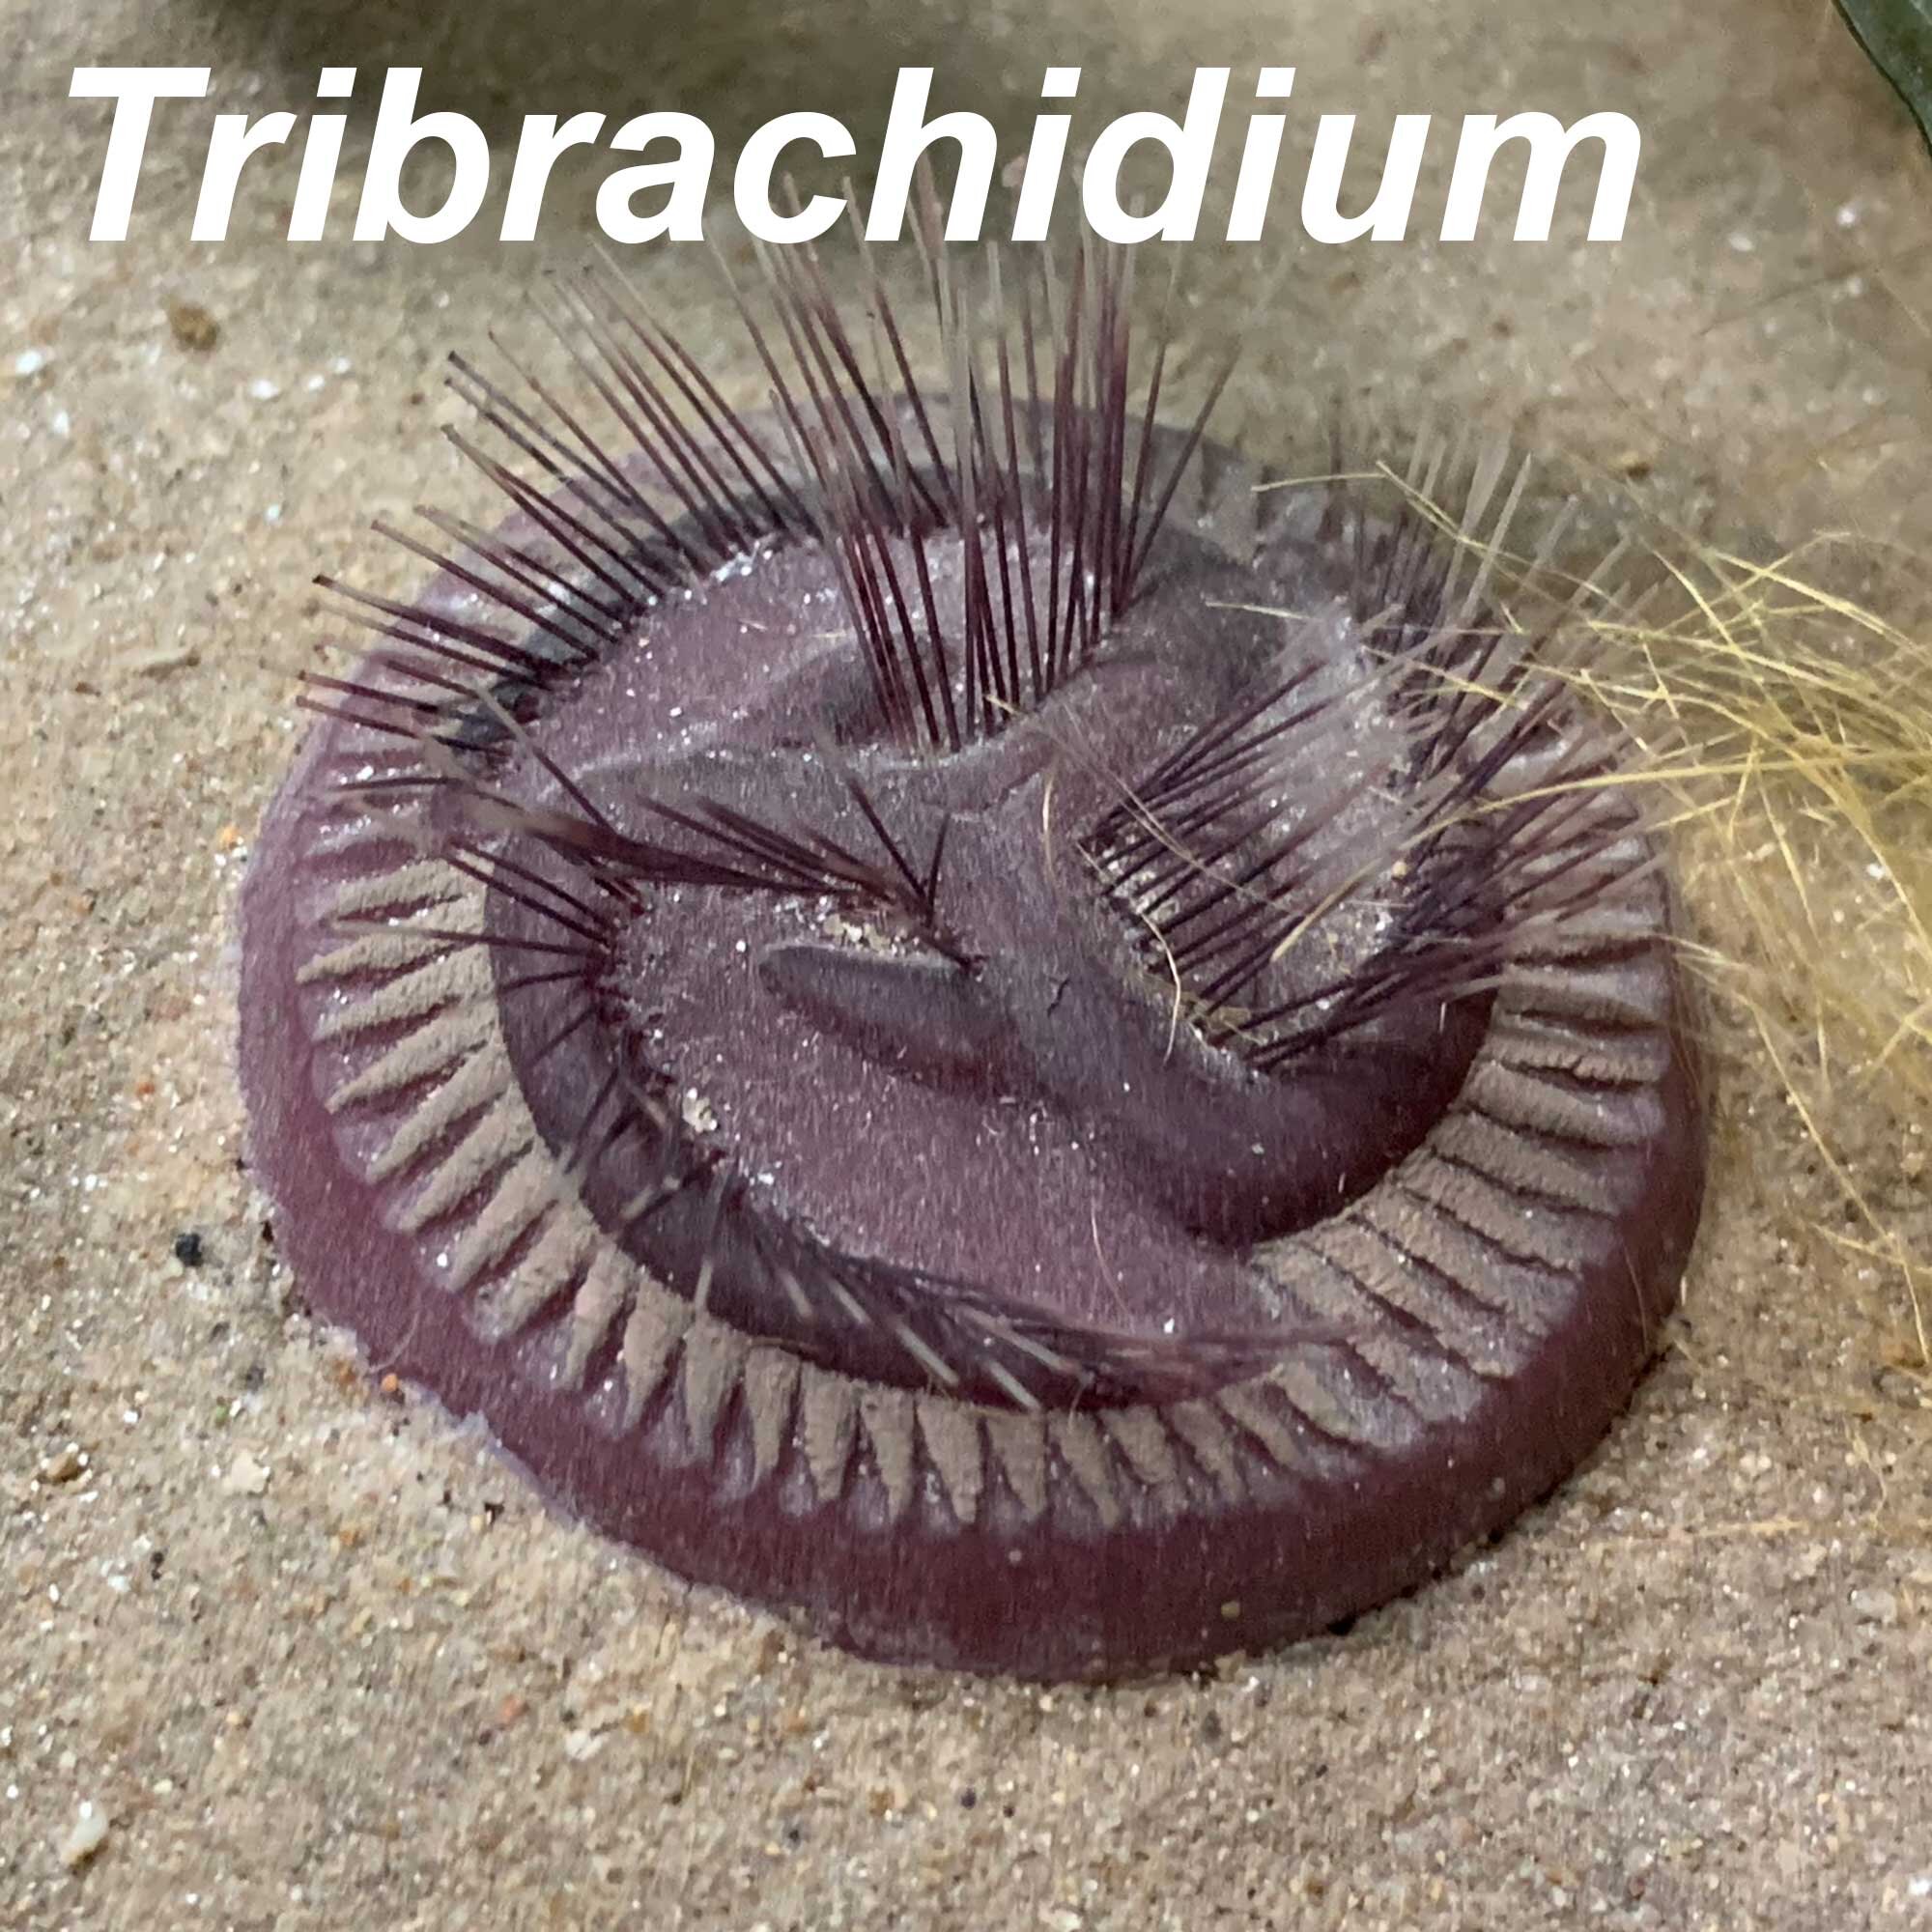 Tribrachidium-2000px-SQ.jpg